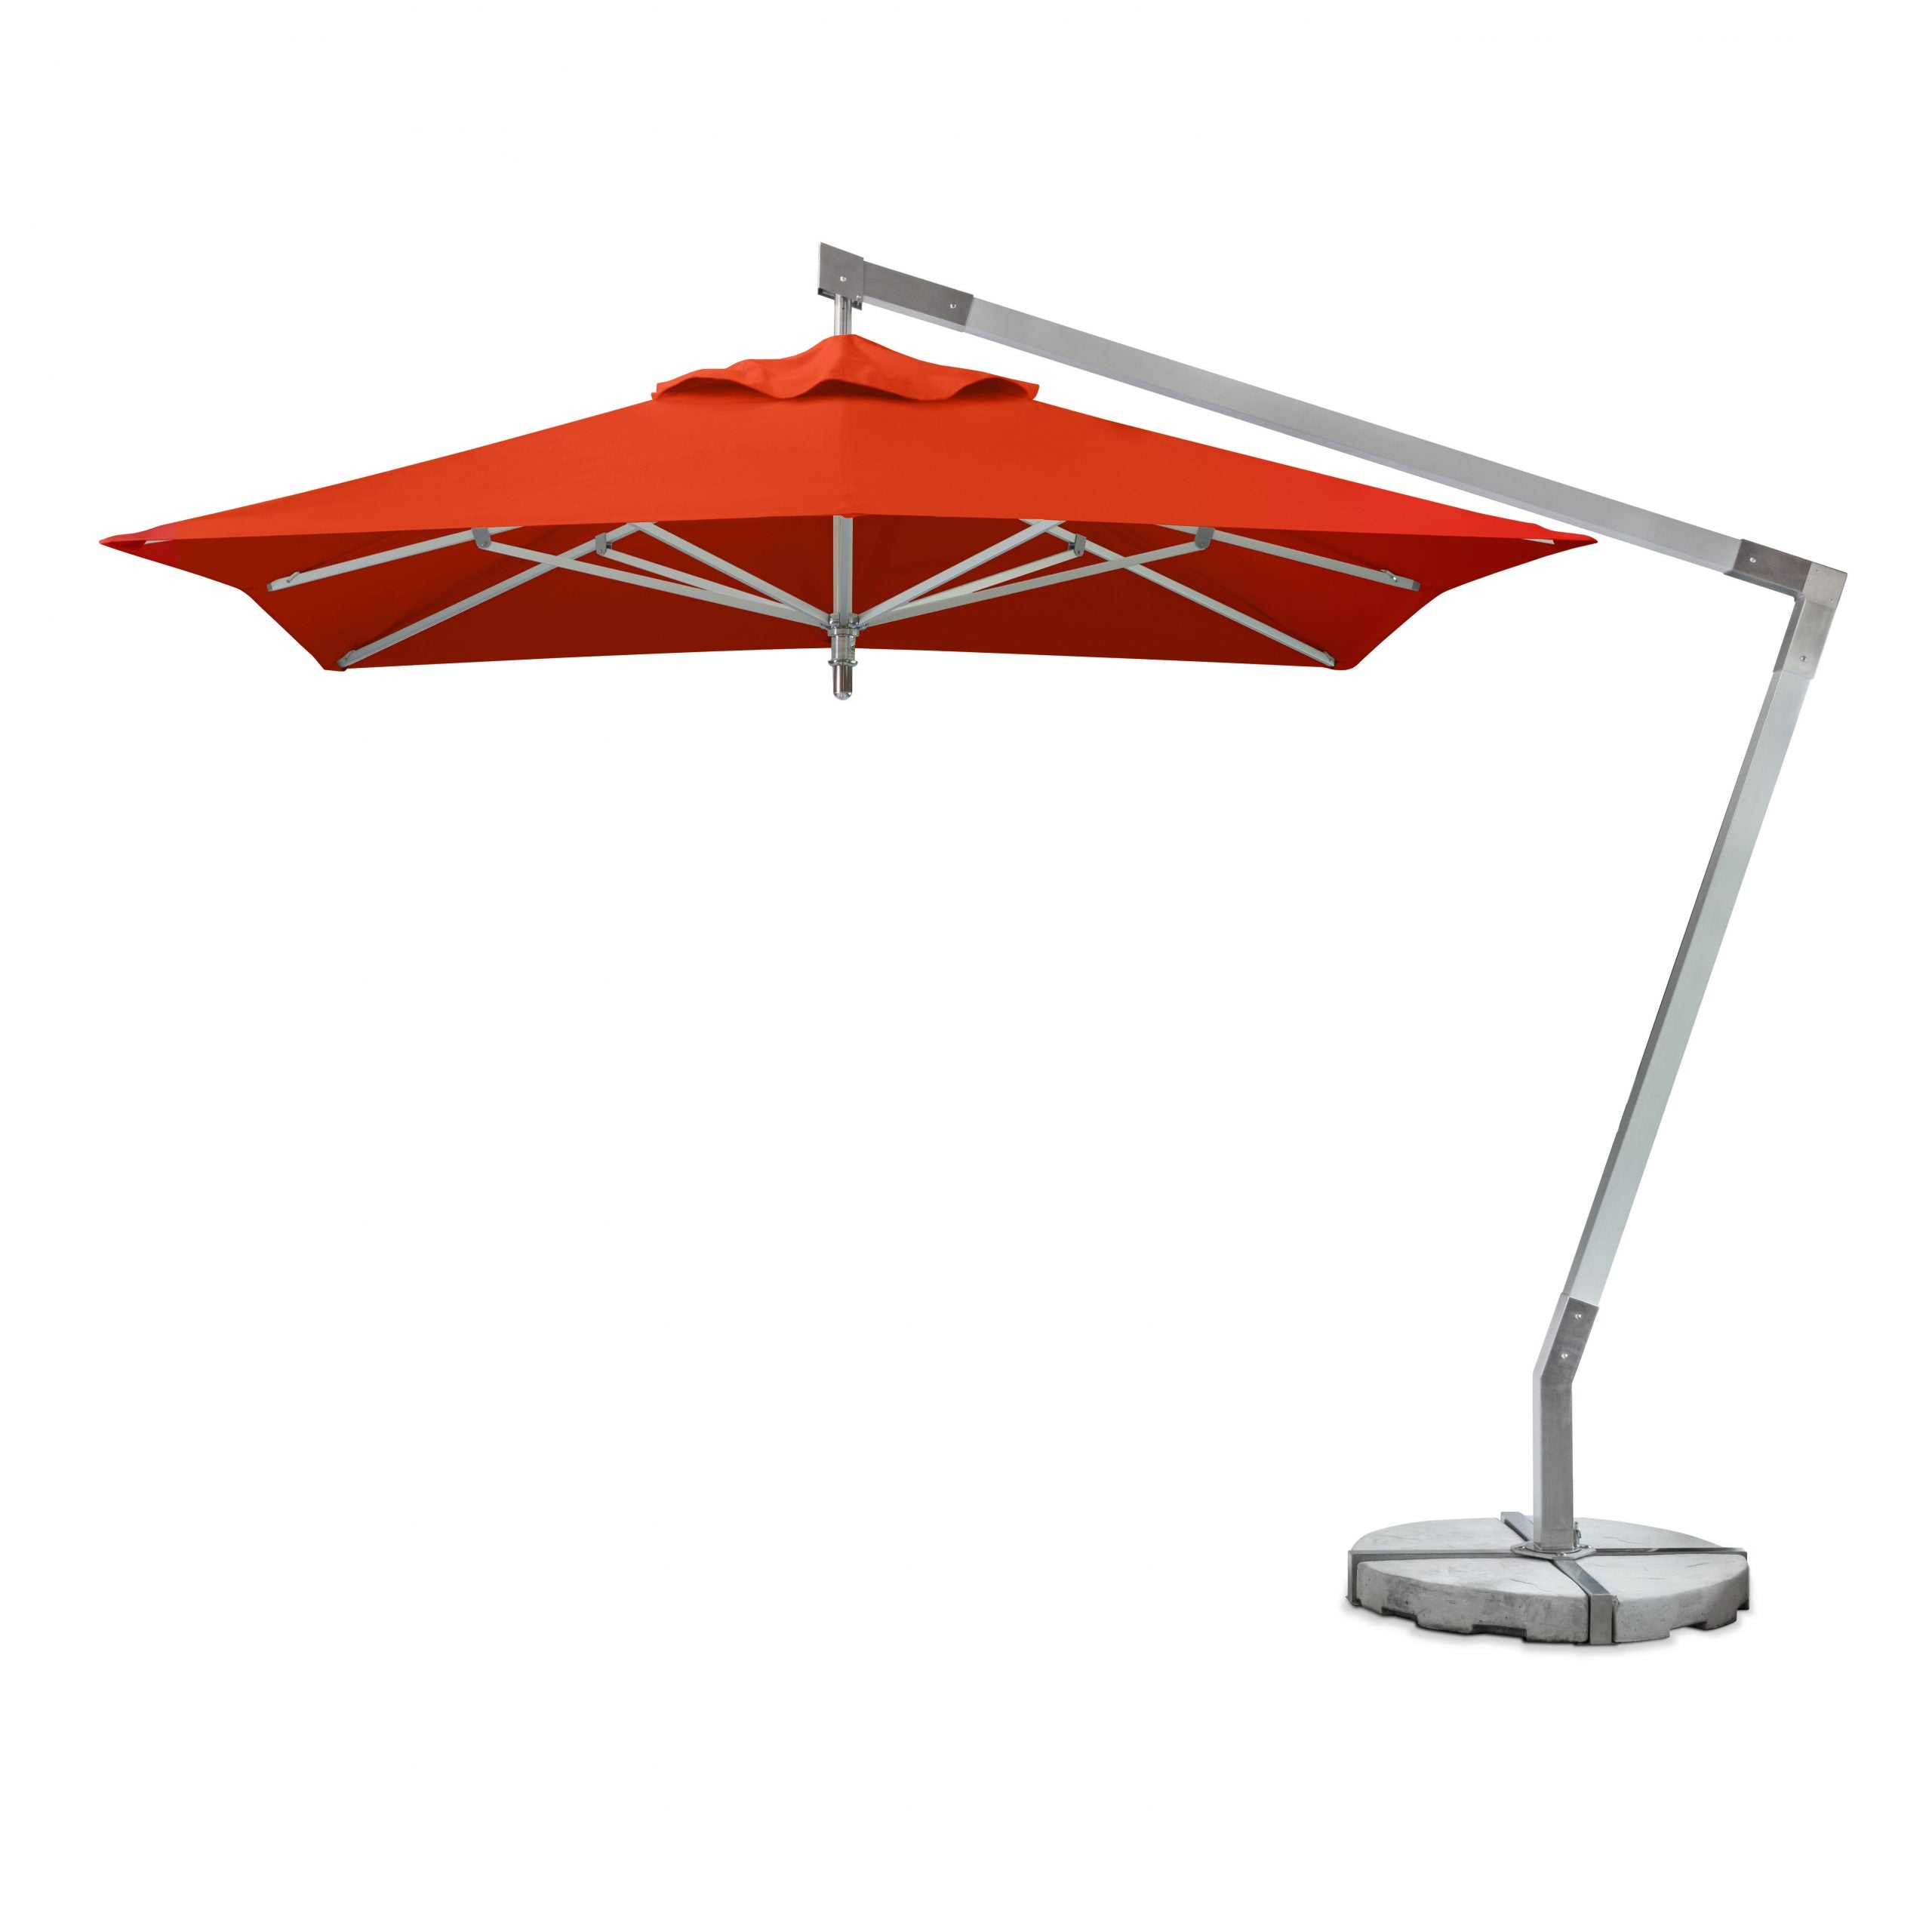 Cape 9.7 x 9.7 ft Automatic Square Cantilever Outdoor Umbrella